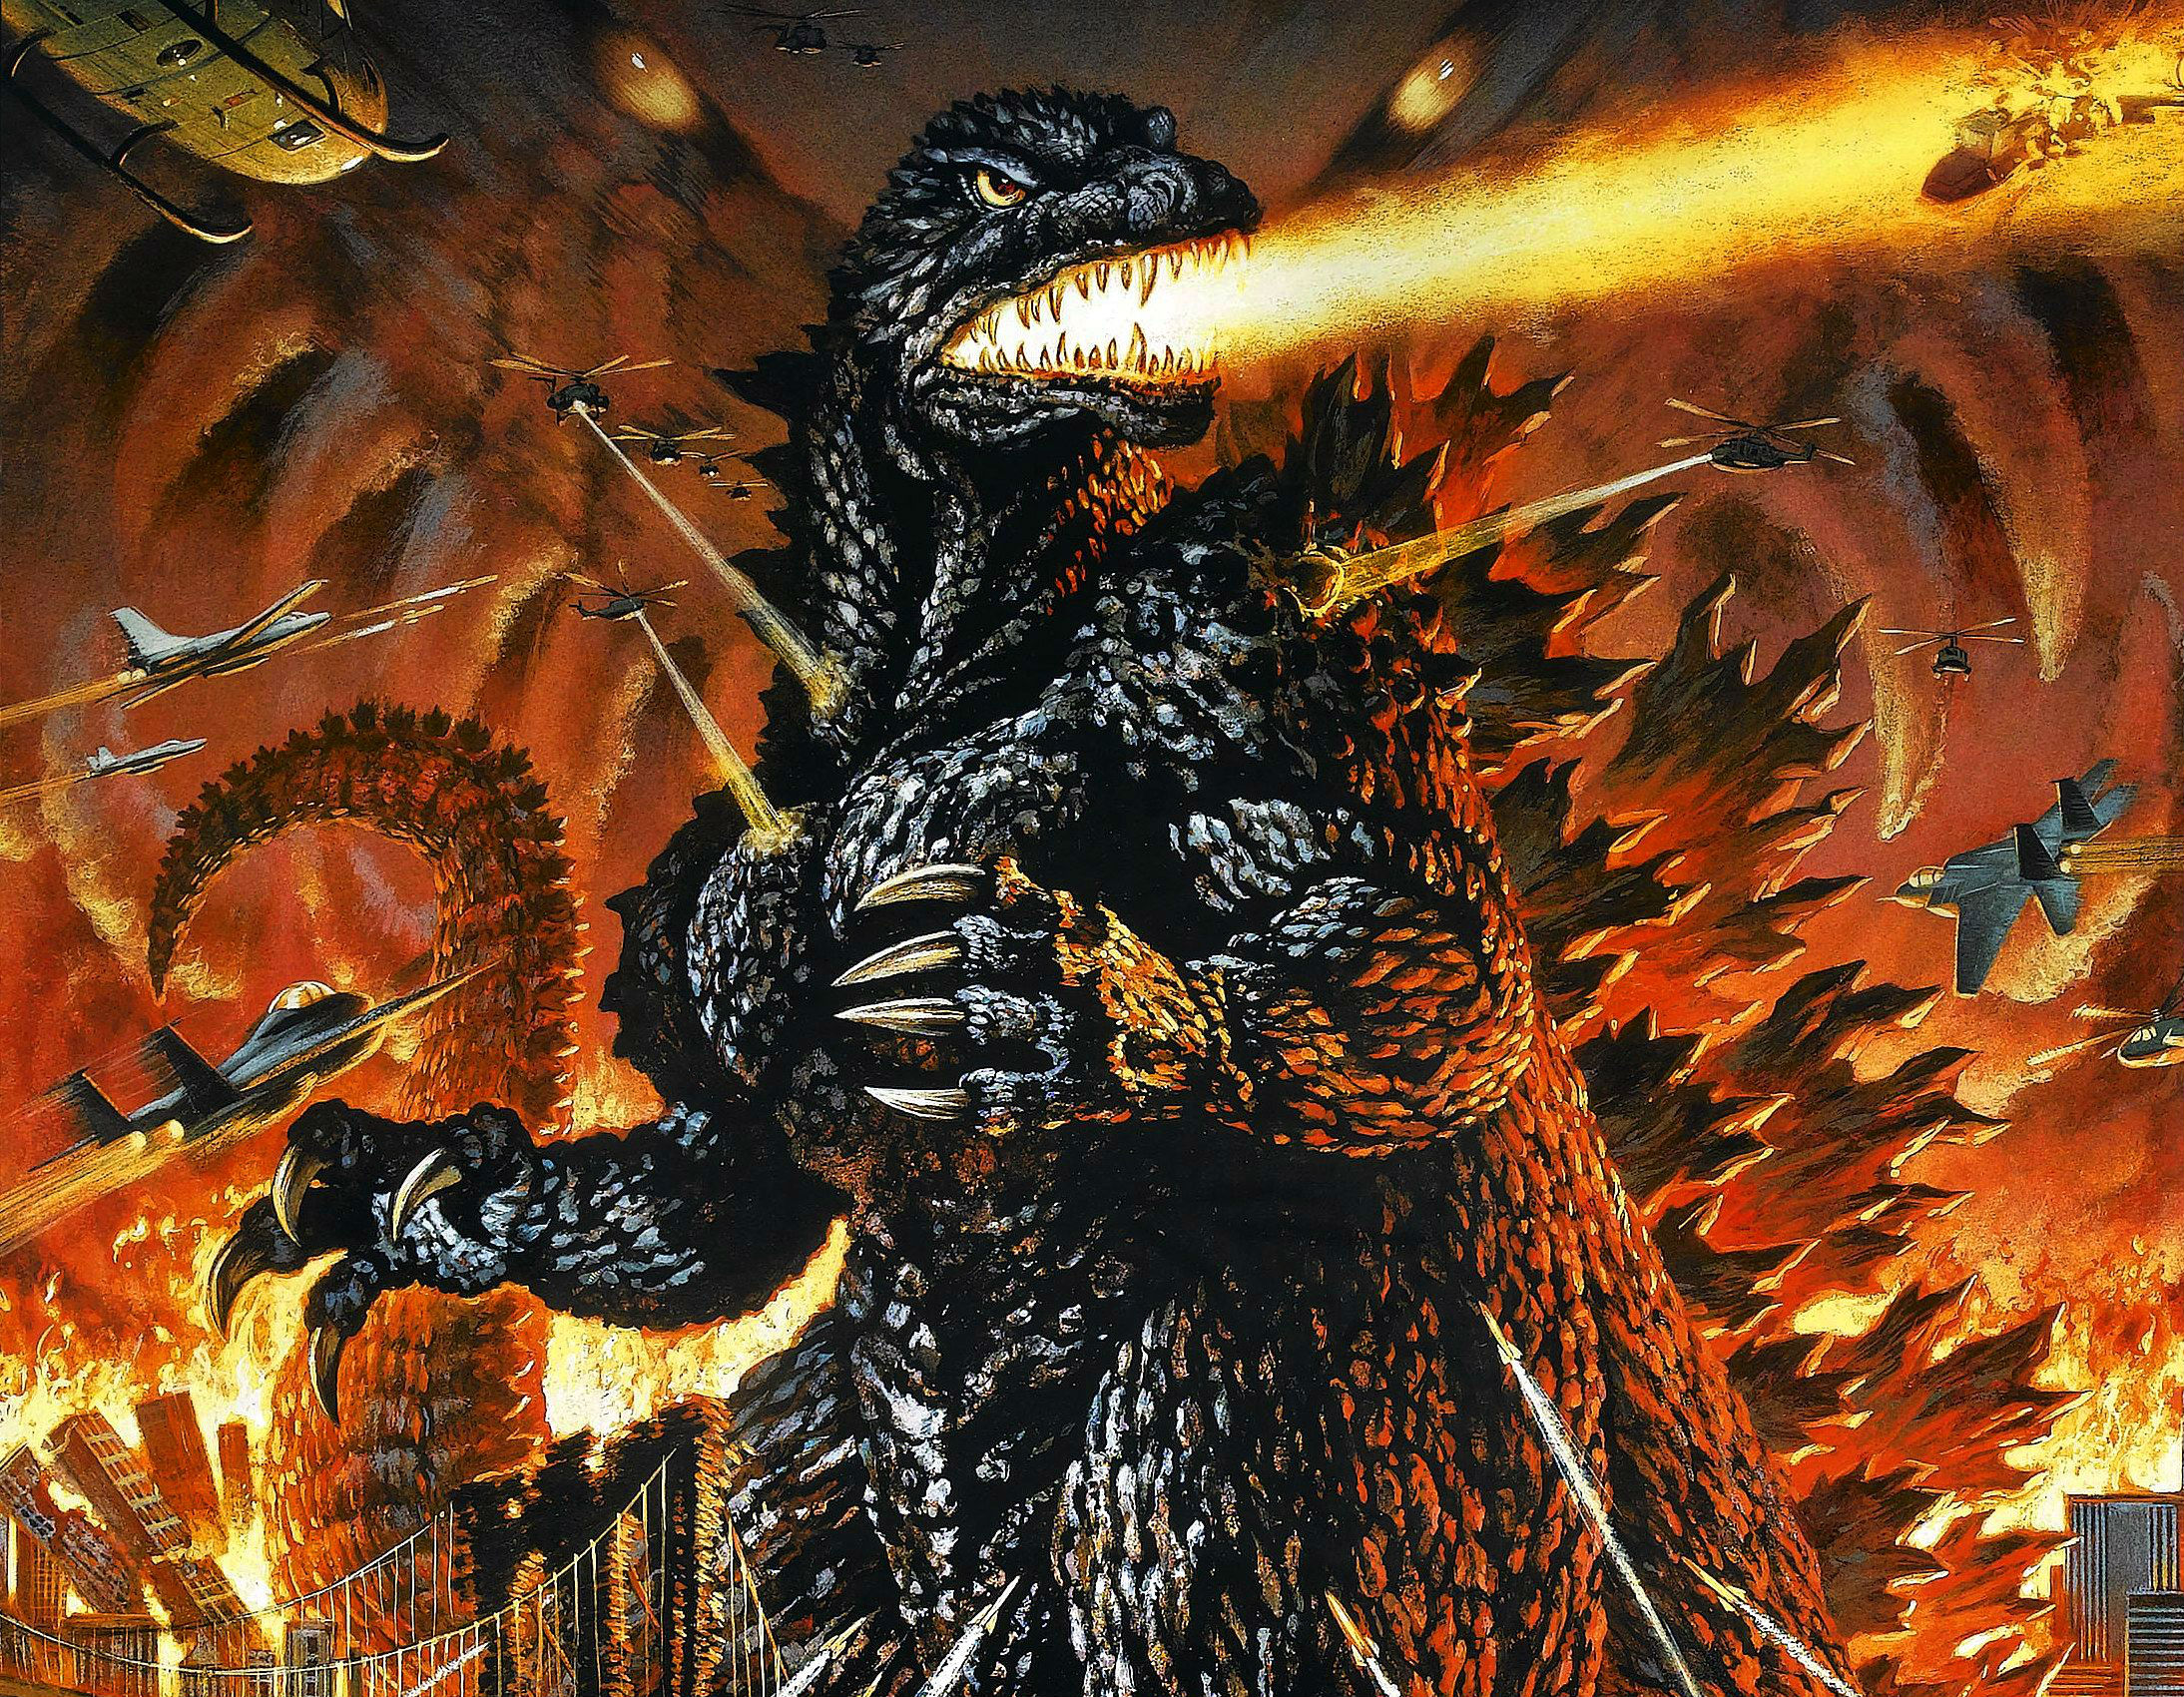 GODZILLA sci-fi fantasy action dinosaur apocalyptic monster f ...